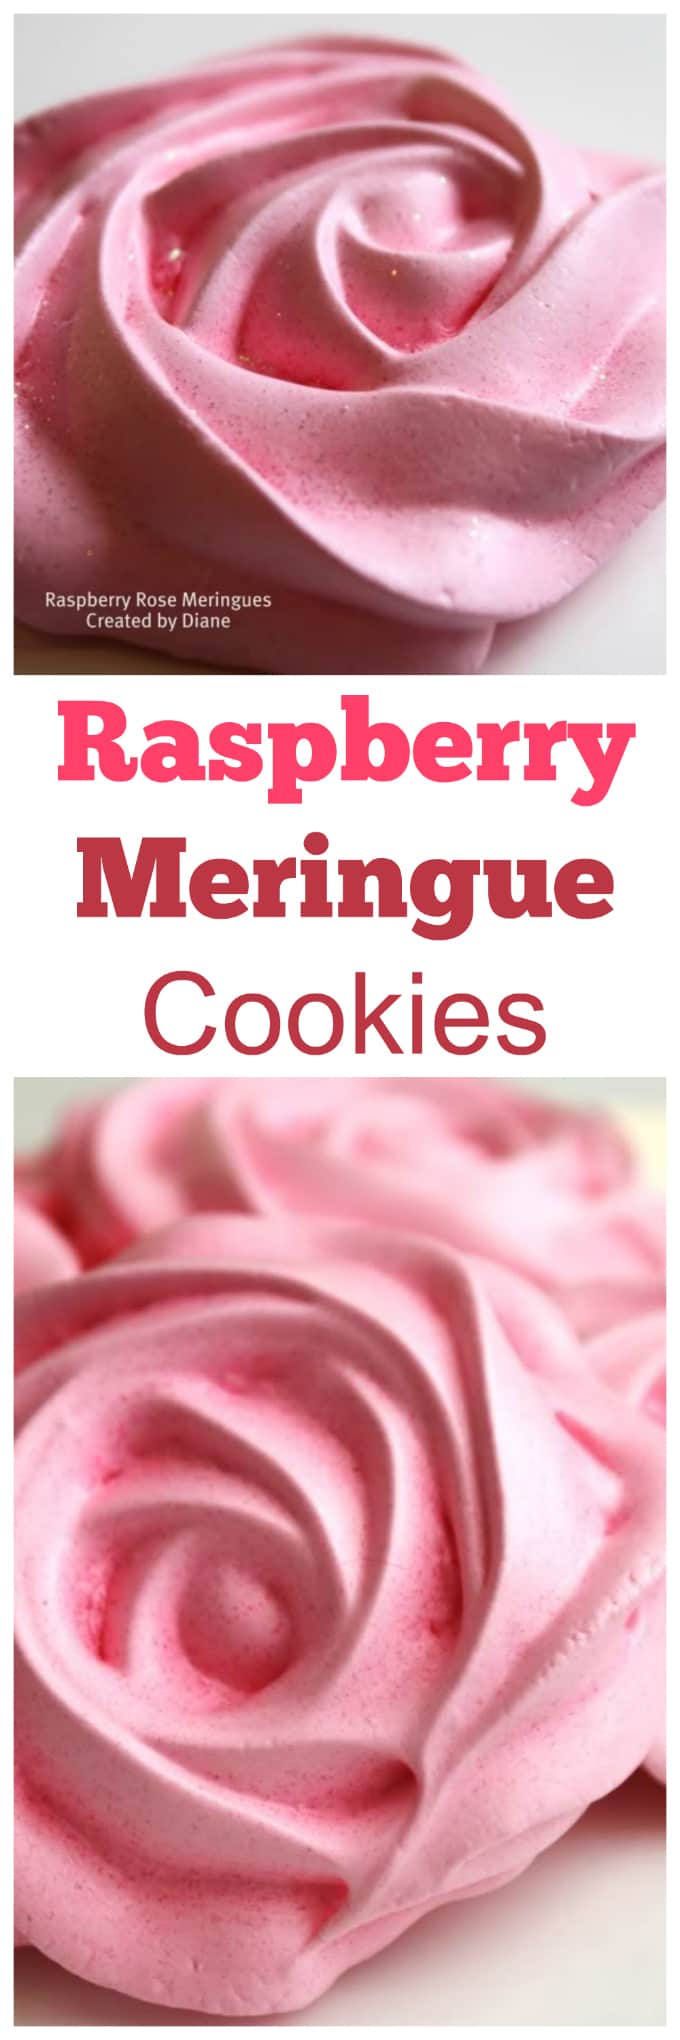 raspberry meringue cookies from @createdbydiane